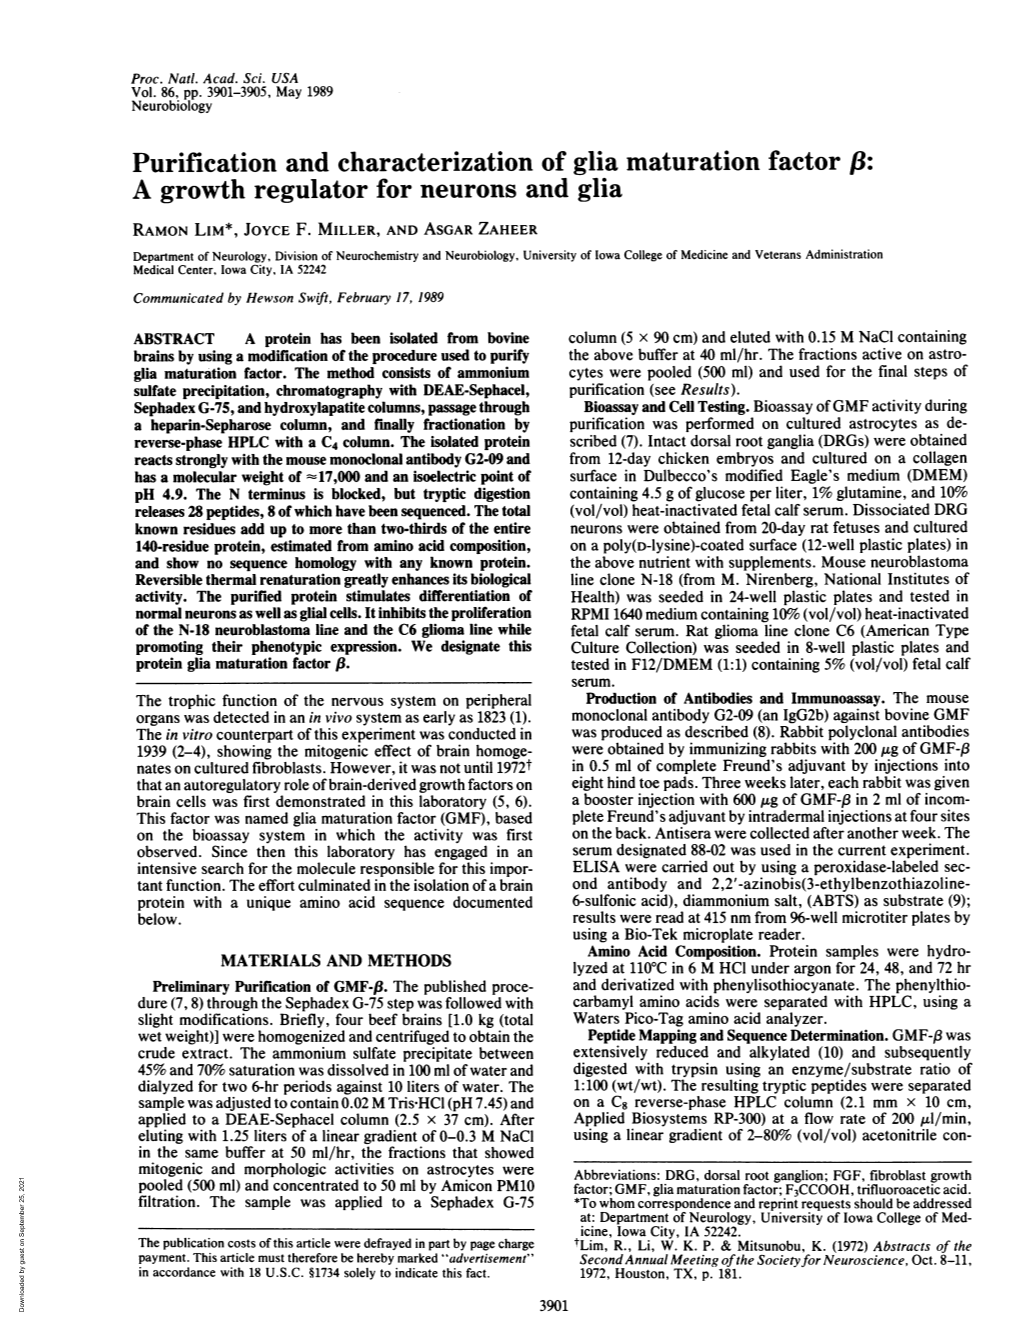 Purification and Characterization of Glia Maturation Factor F8: a Growth Regulator for Neurons and Glia RAMON LIM*, JOYCE F